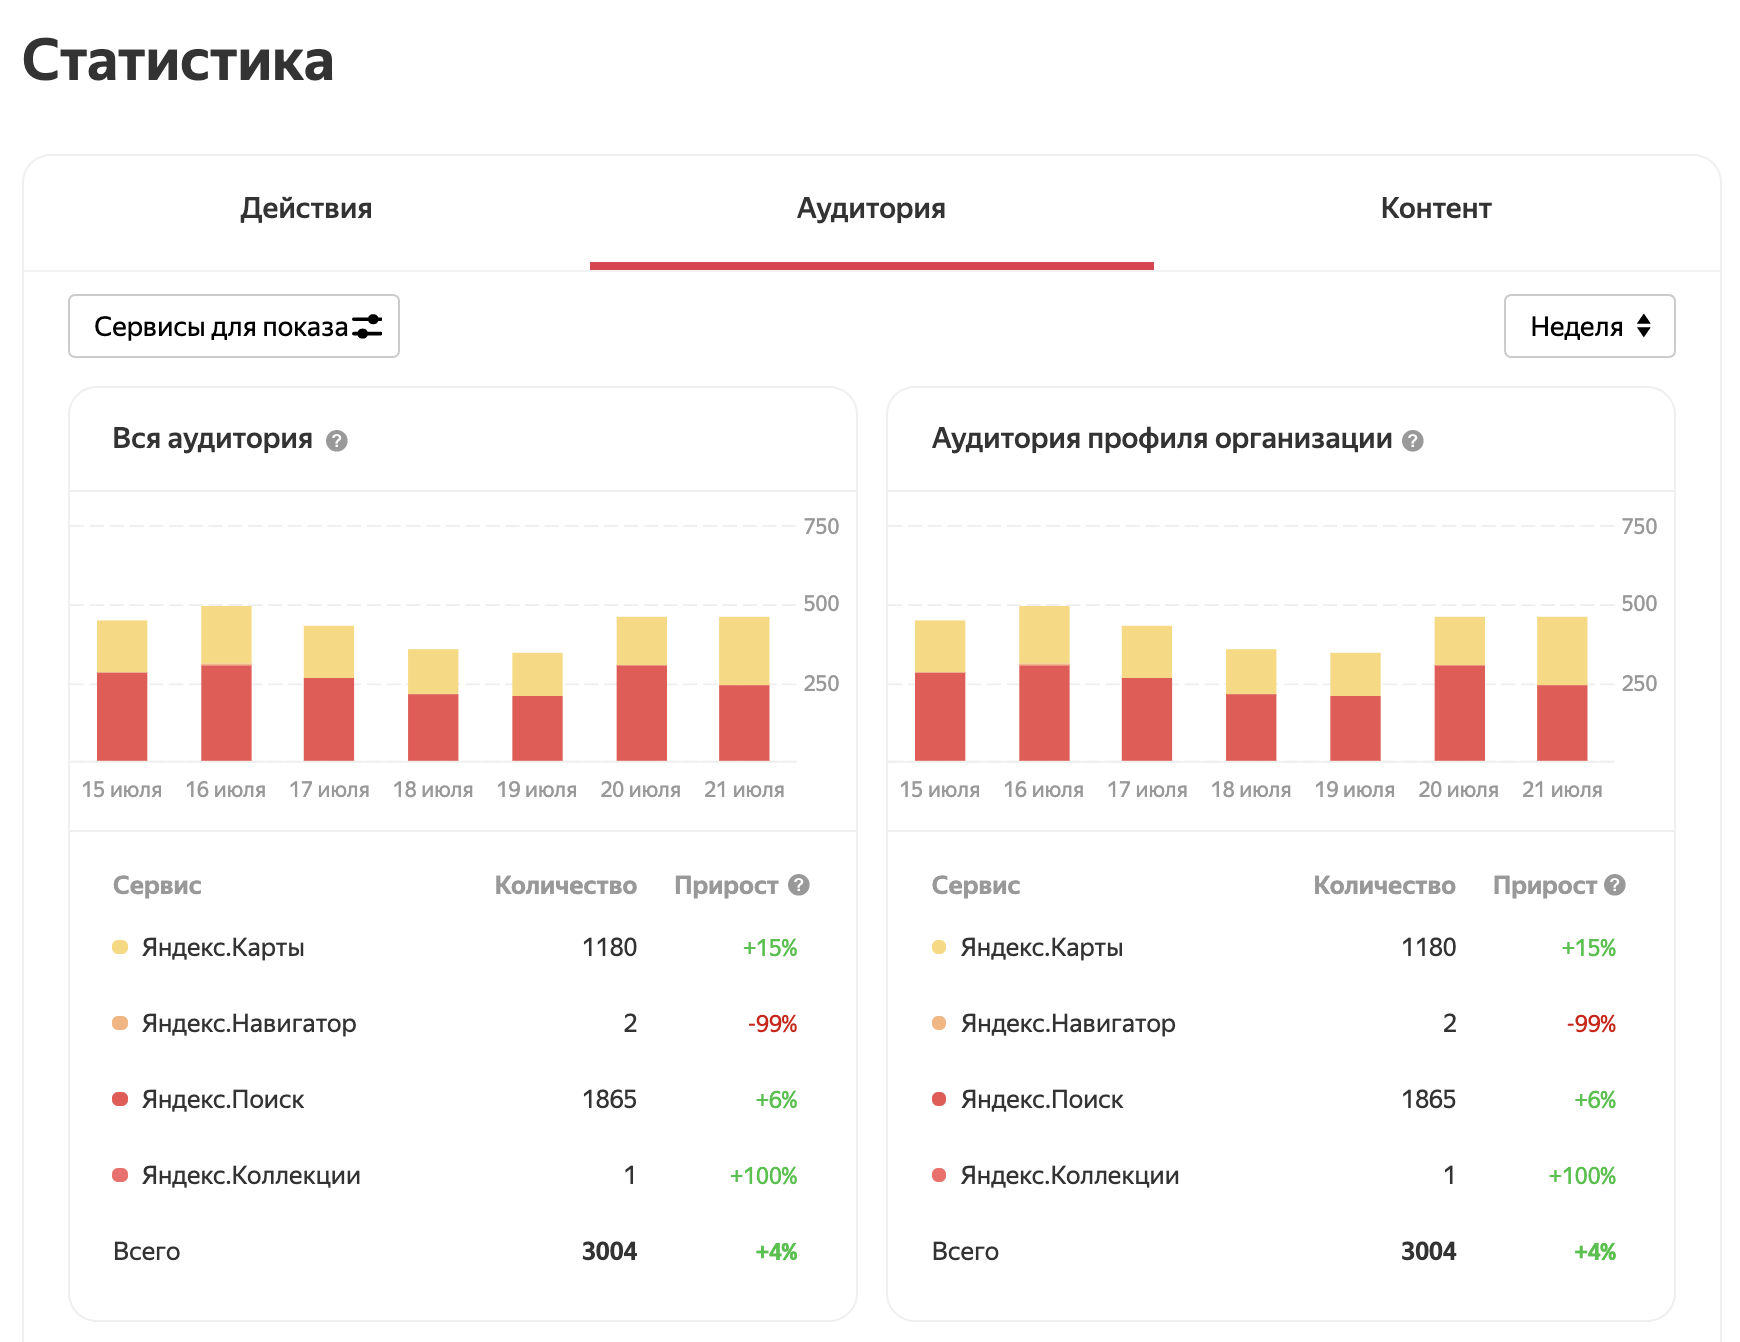 Объединённая статистика из сервисов Яндекса | Студия «WEBLUX»